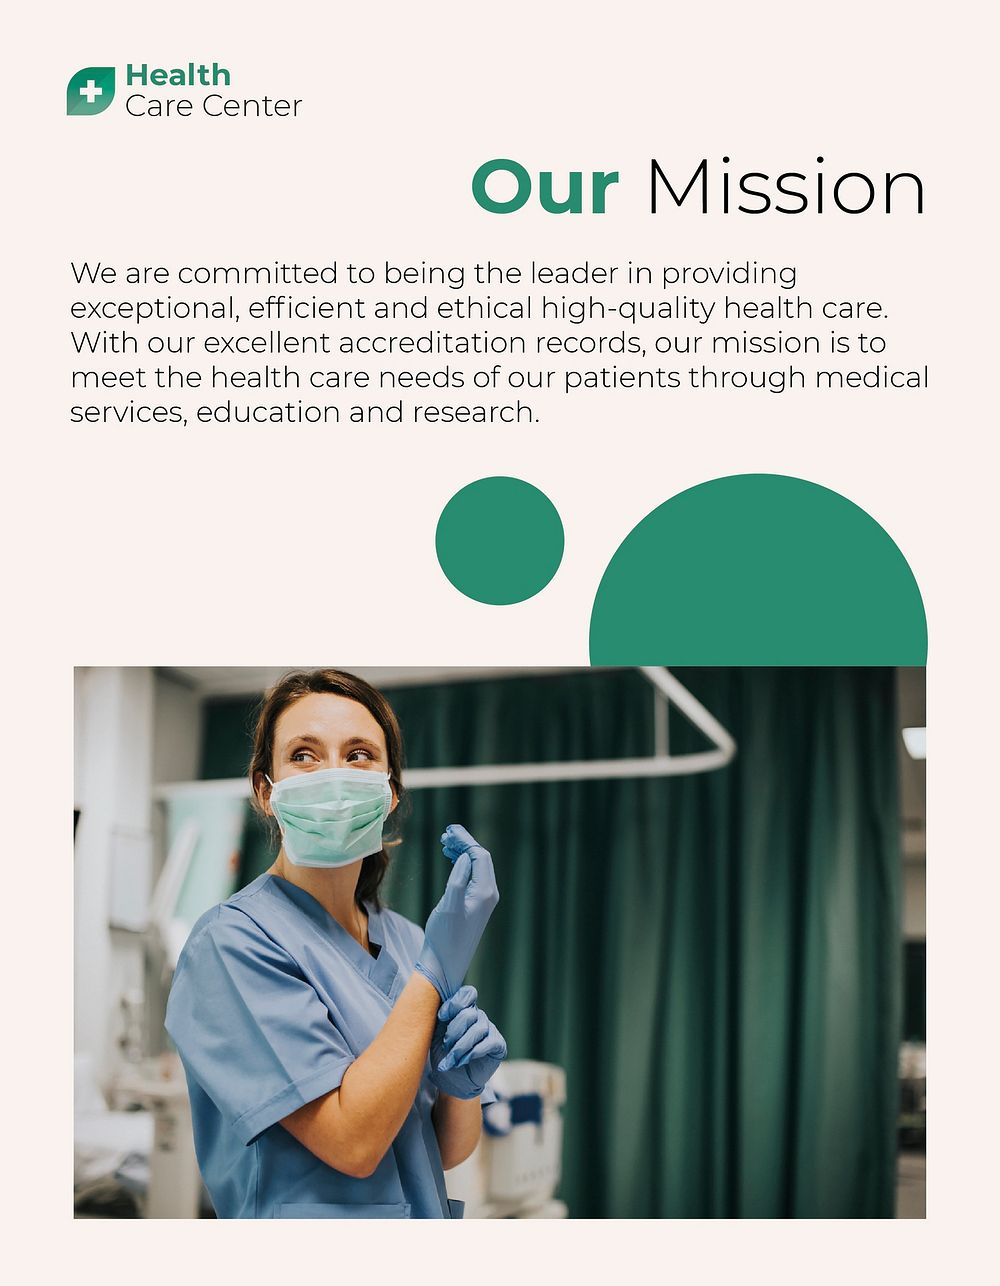 Hospital mission statement flyer template, medical business psd